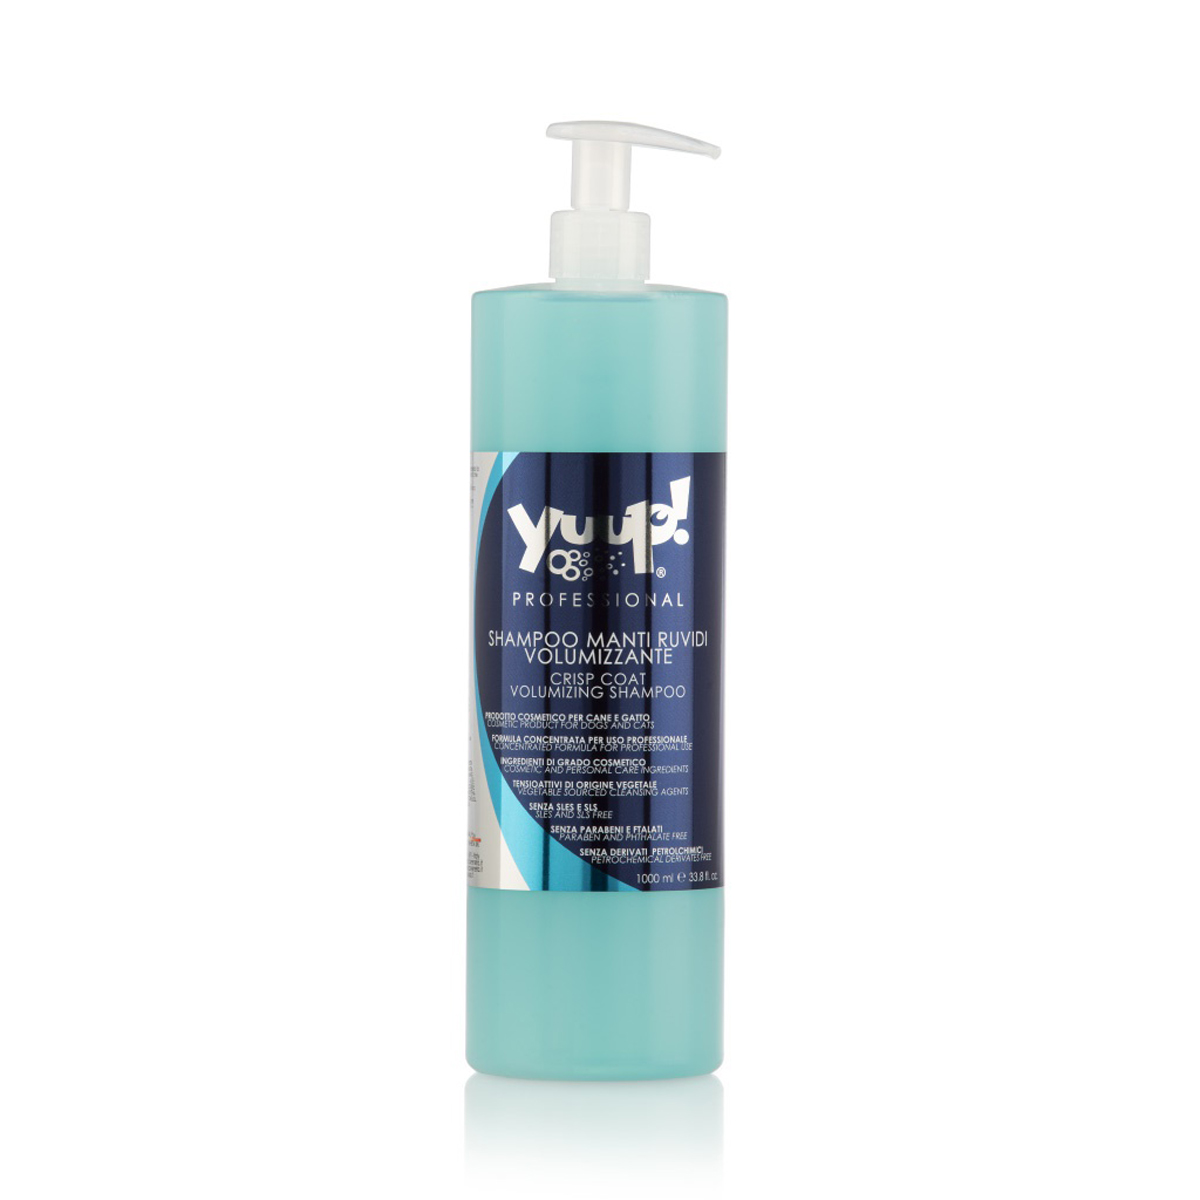 Yuup! Professional Shampoo Volumen für raues Fell